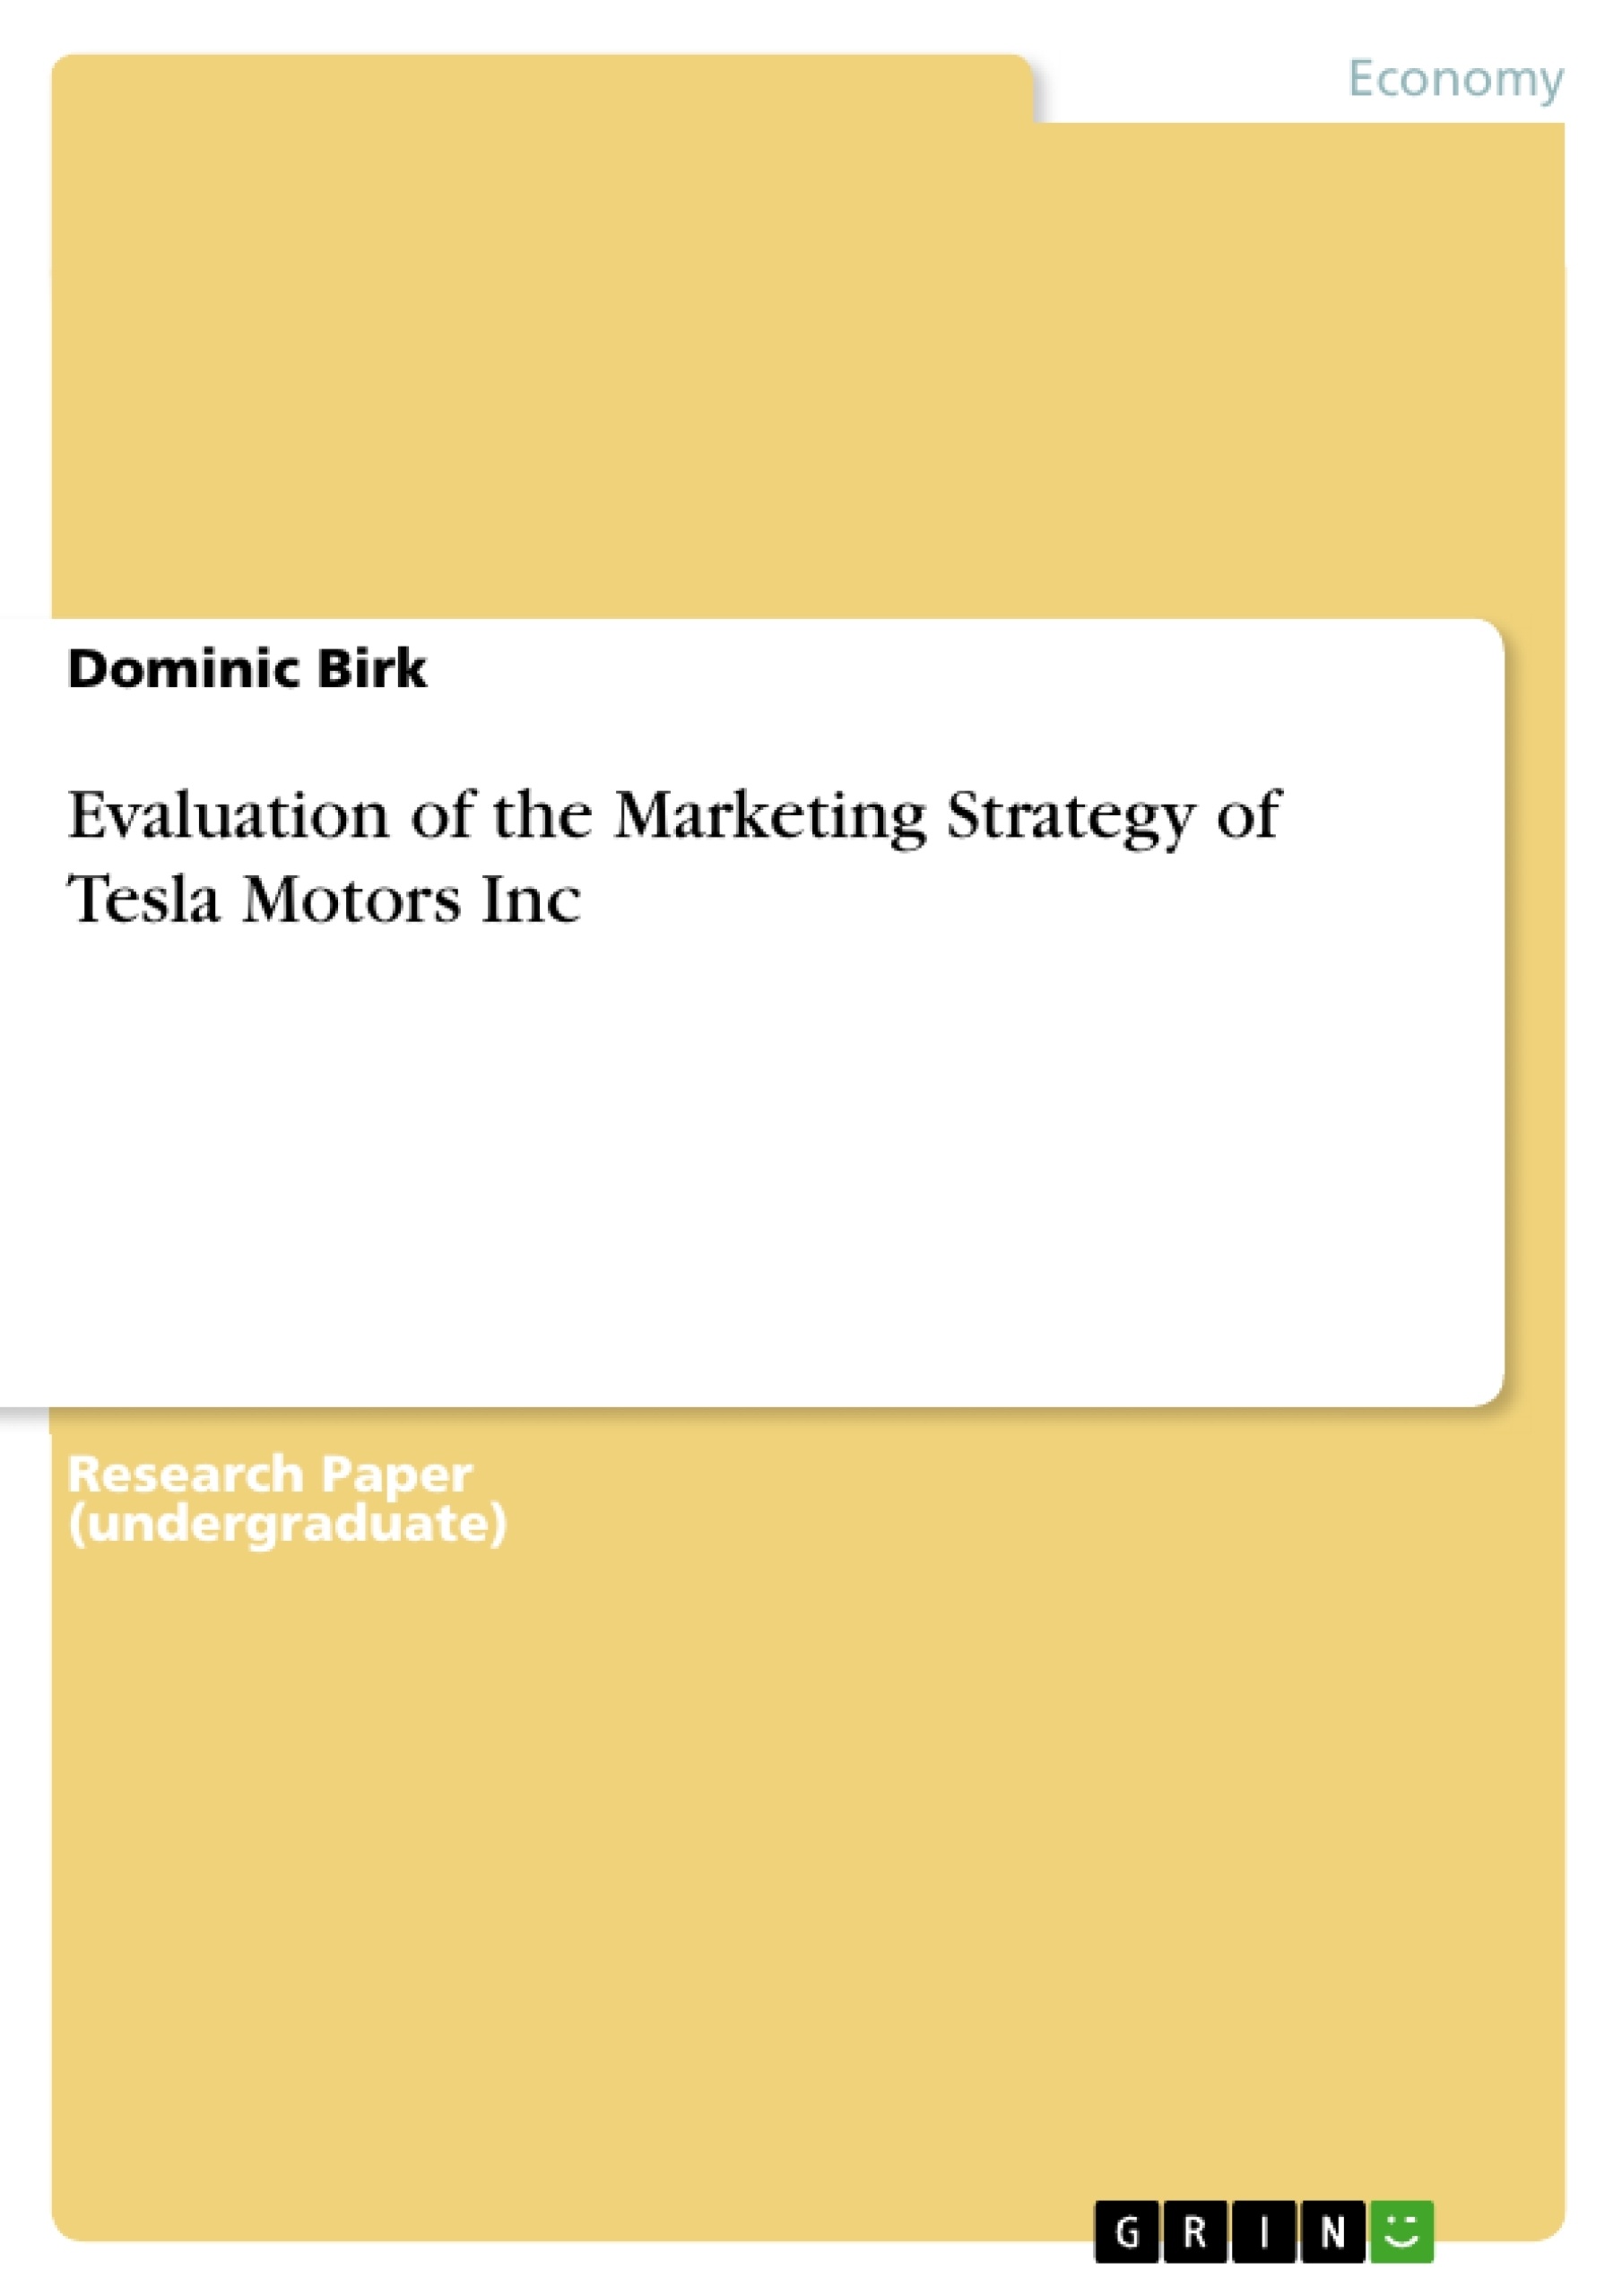 Title: Evaluation of the Marketing Strategy of Tesla Motors Inc